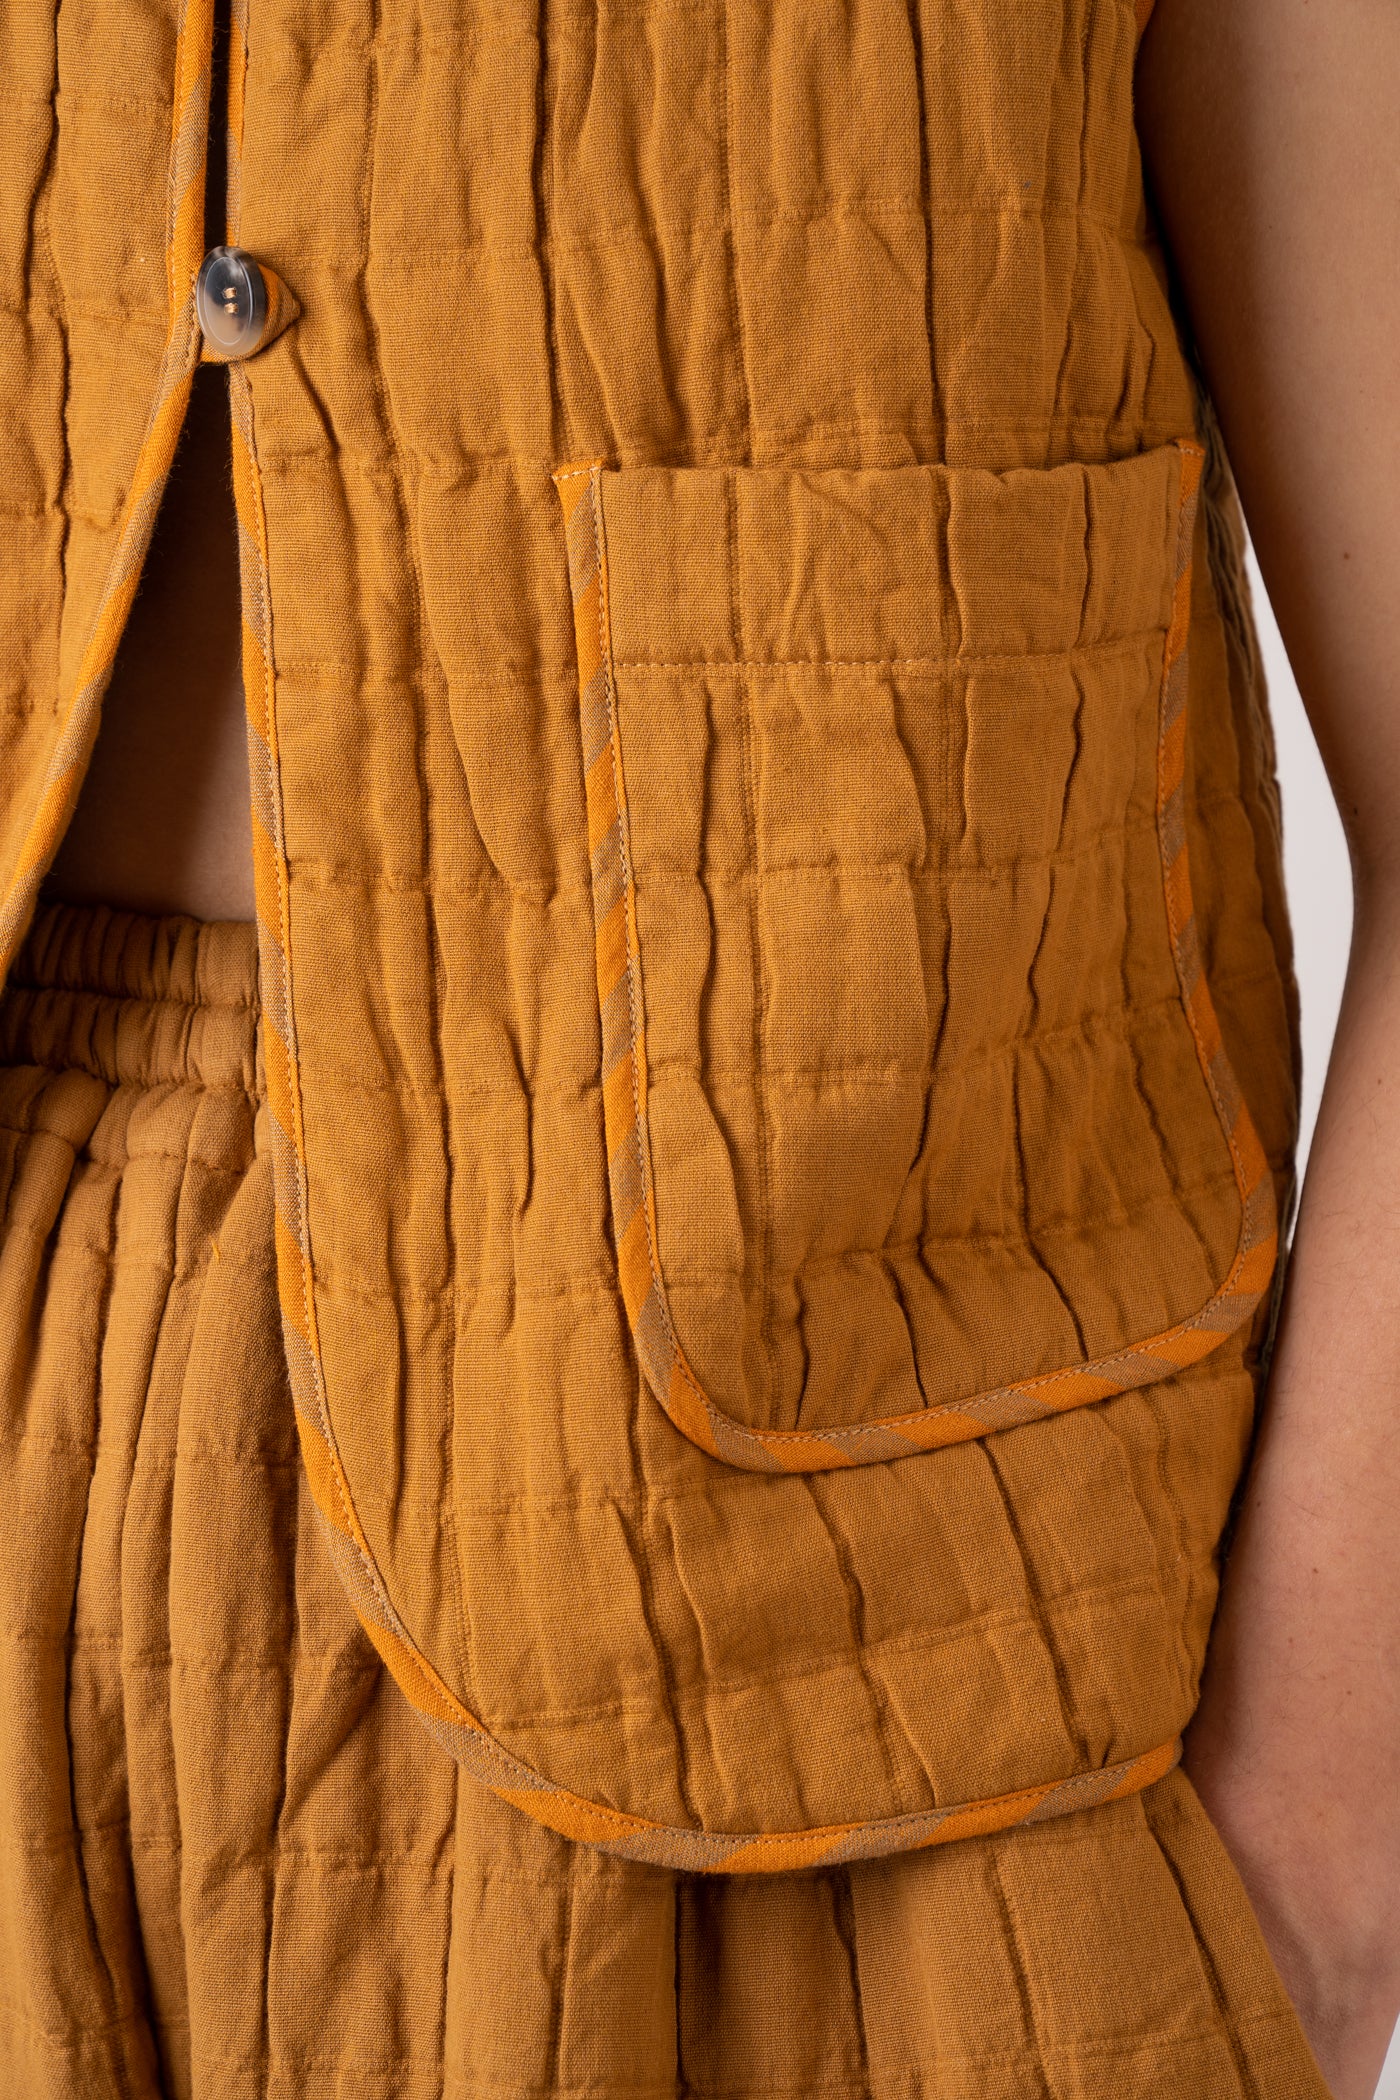 Cawley Studio Indian Jacquard Cotton and Irish Stripe Linen Ella Vest handmade in London with coroza buttons